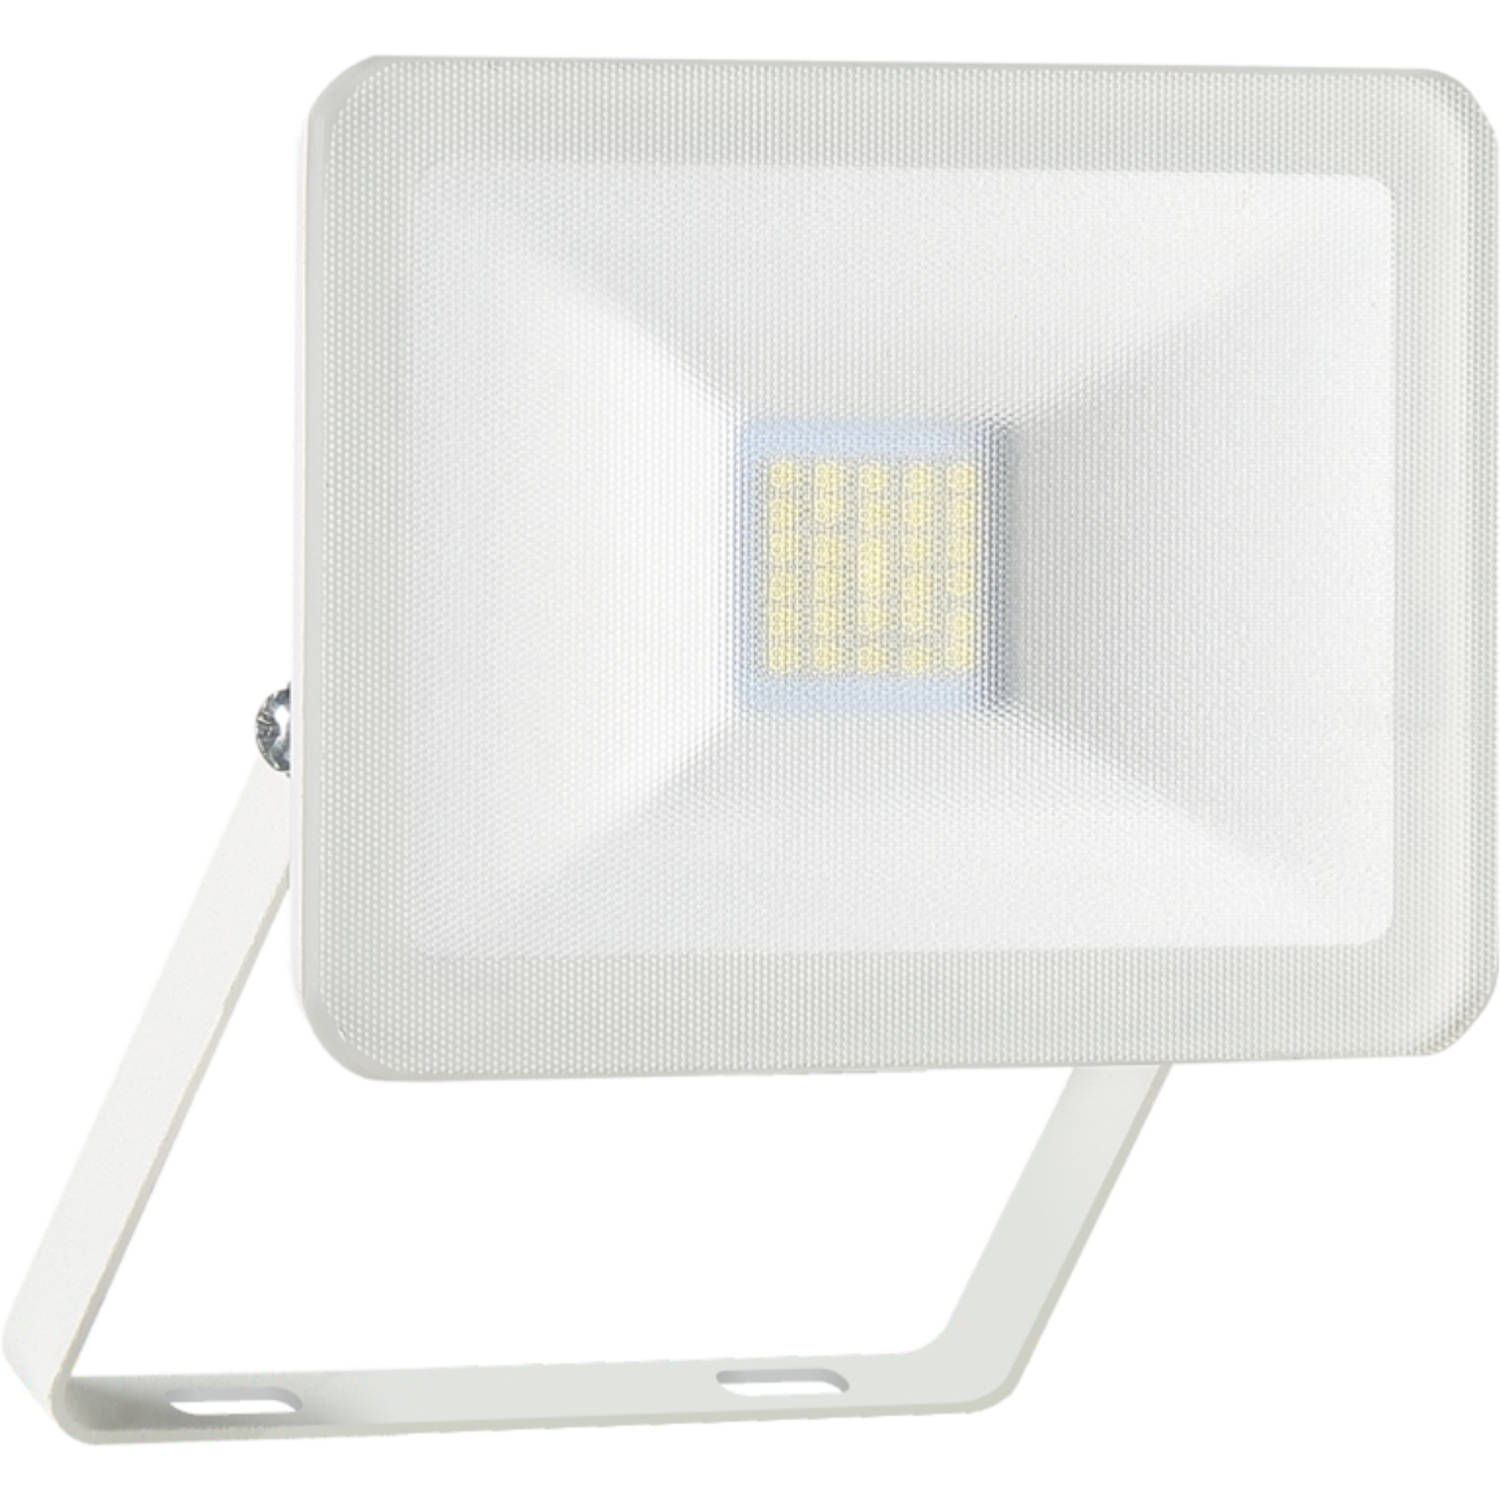 ELRO LF60 Design LED Buitenlamp 10W - 800LM - IP54 Waterdicht - Wit